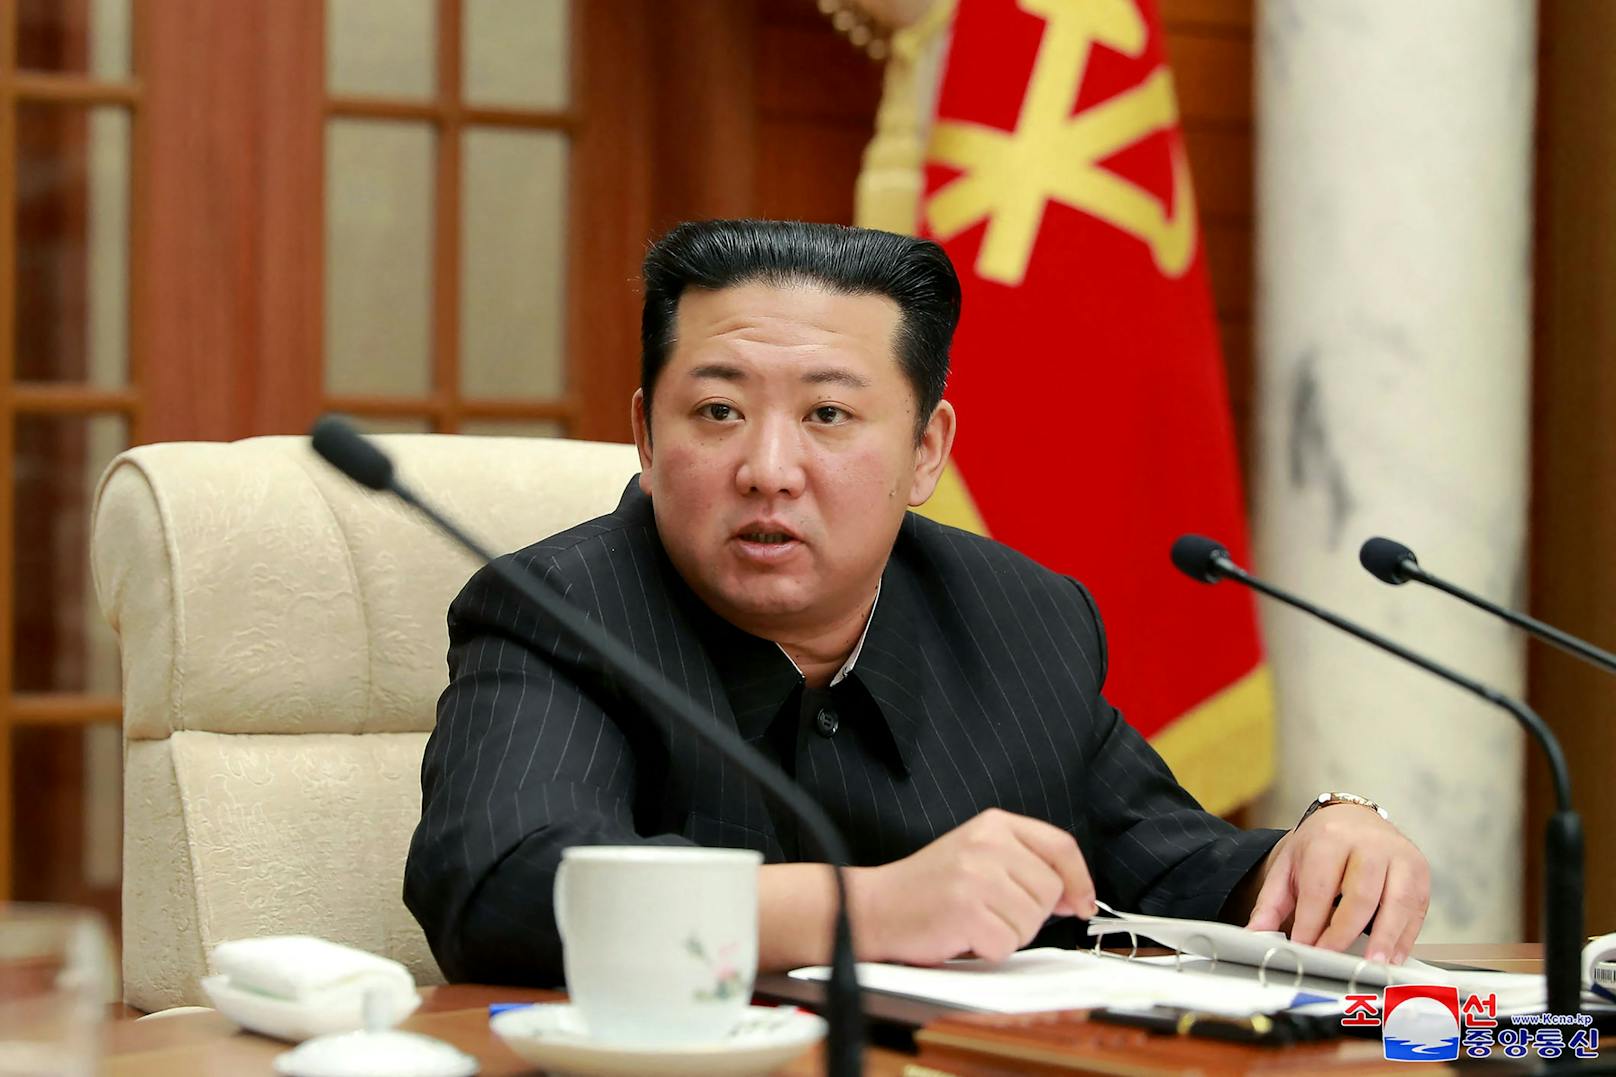 "Zu verrückt für uns": Kim Jong-un weist Putin-Bitte ab